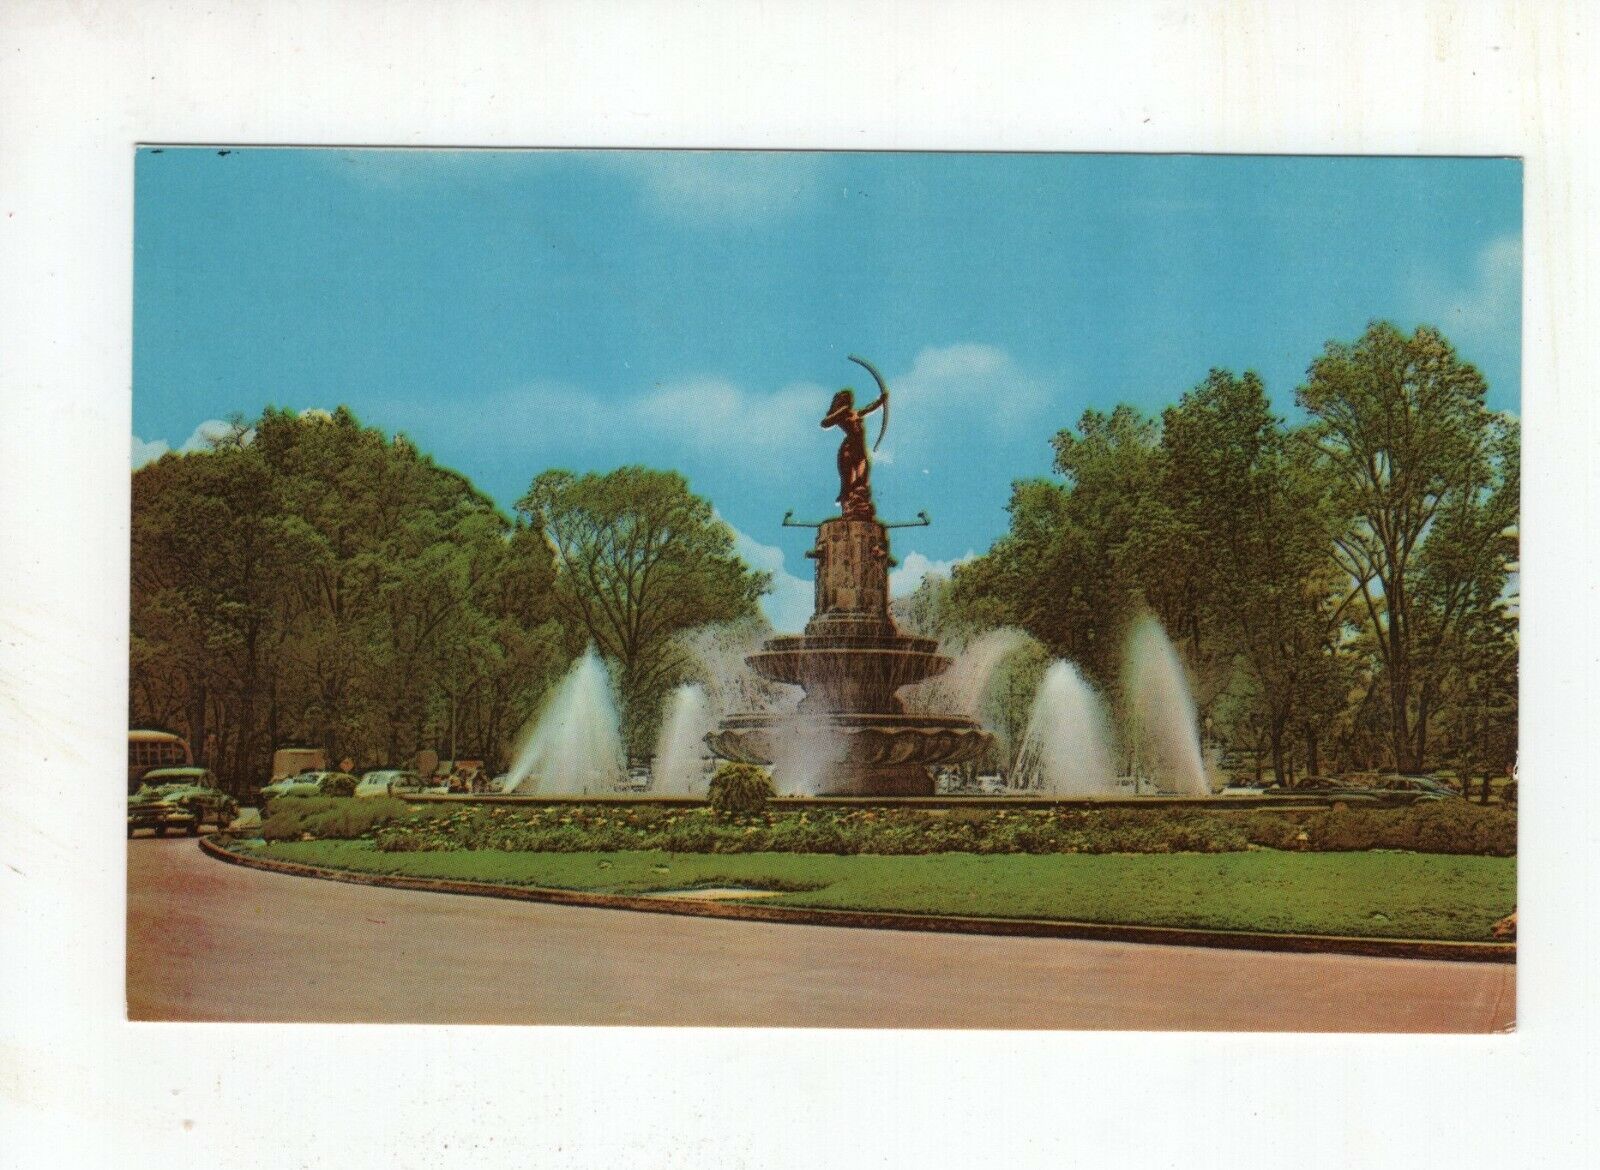 Vintage Post Card - Diana Cazadora - Diana the Huntress Fountain - Mexico City